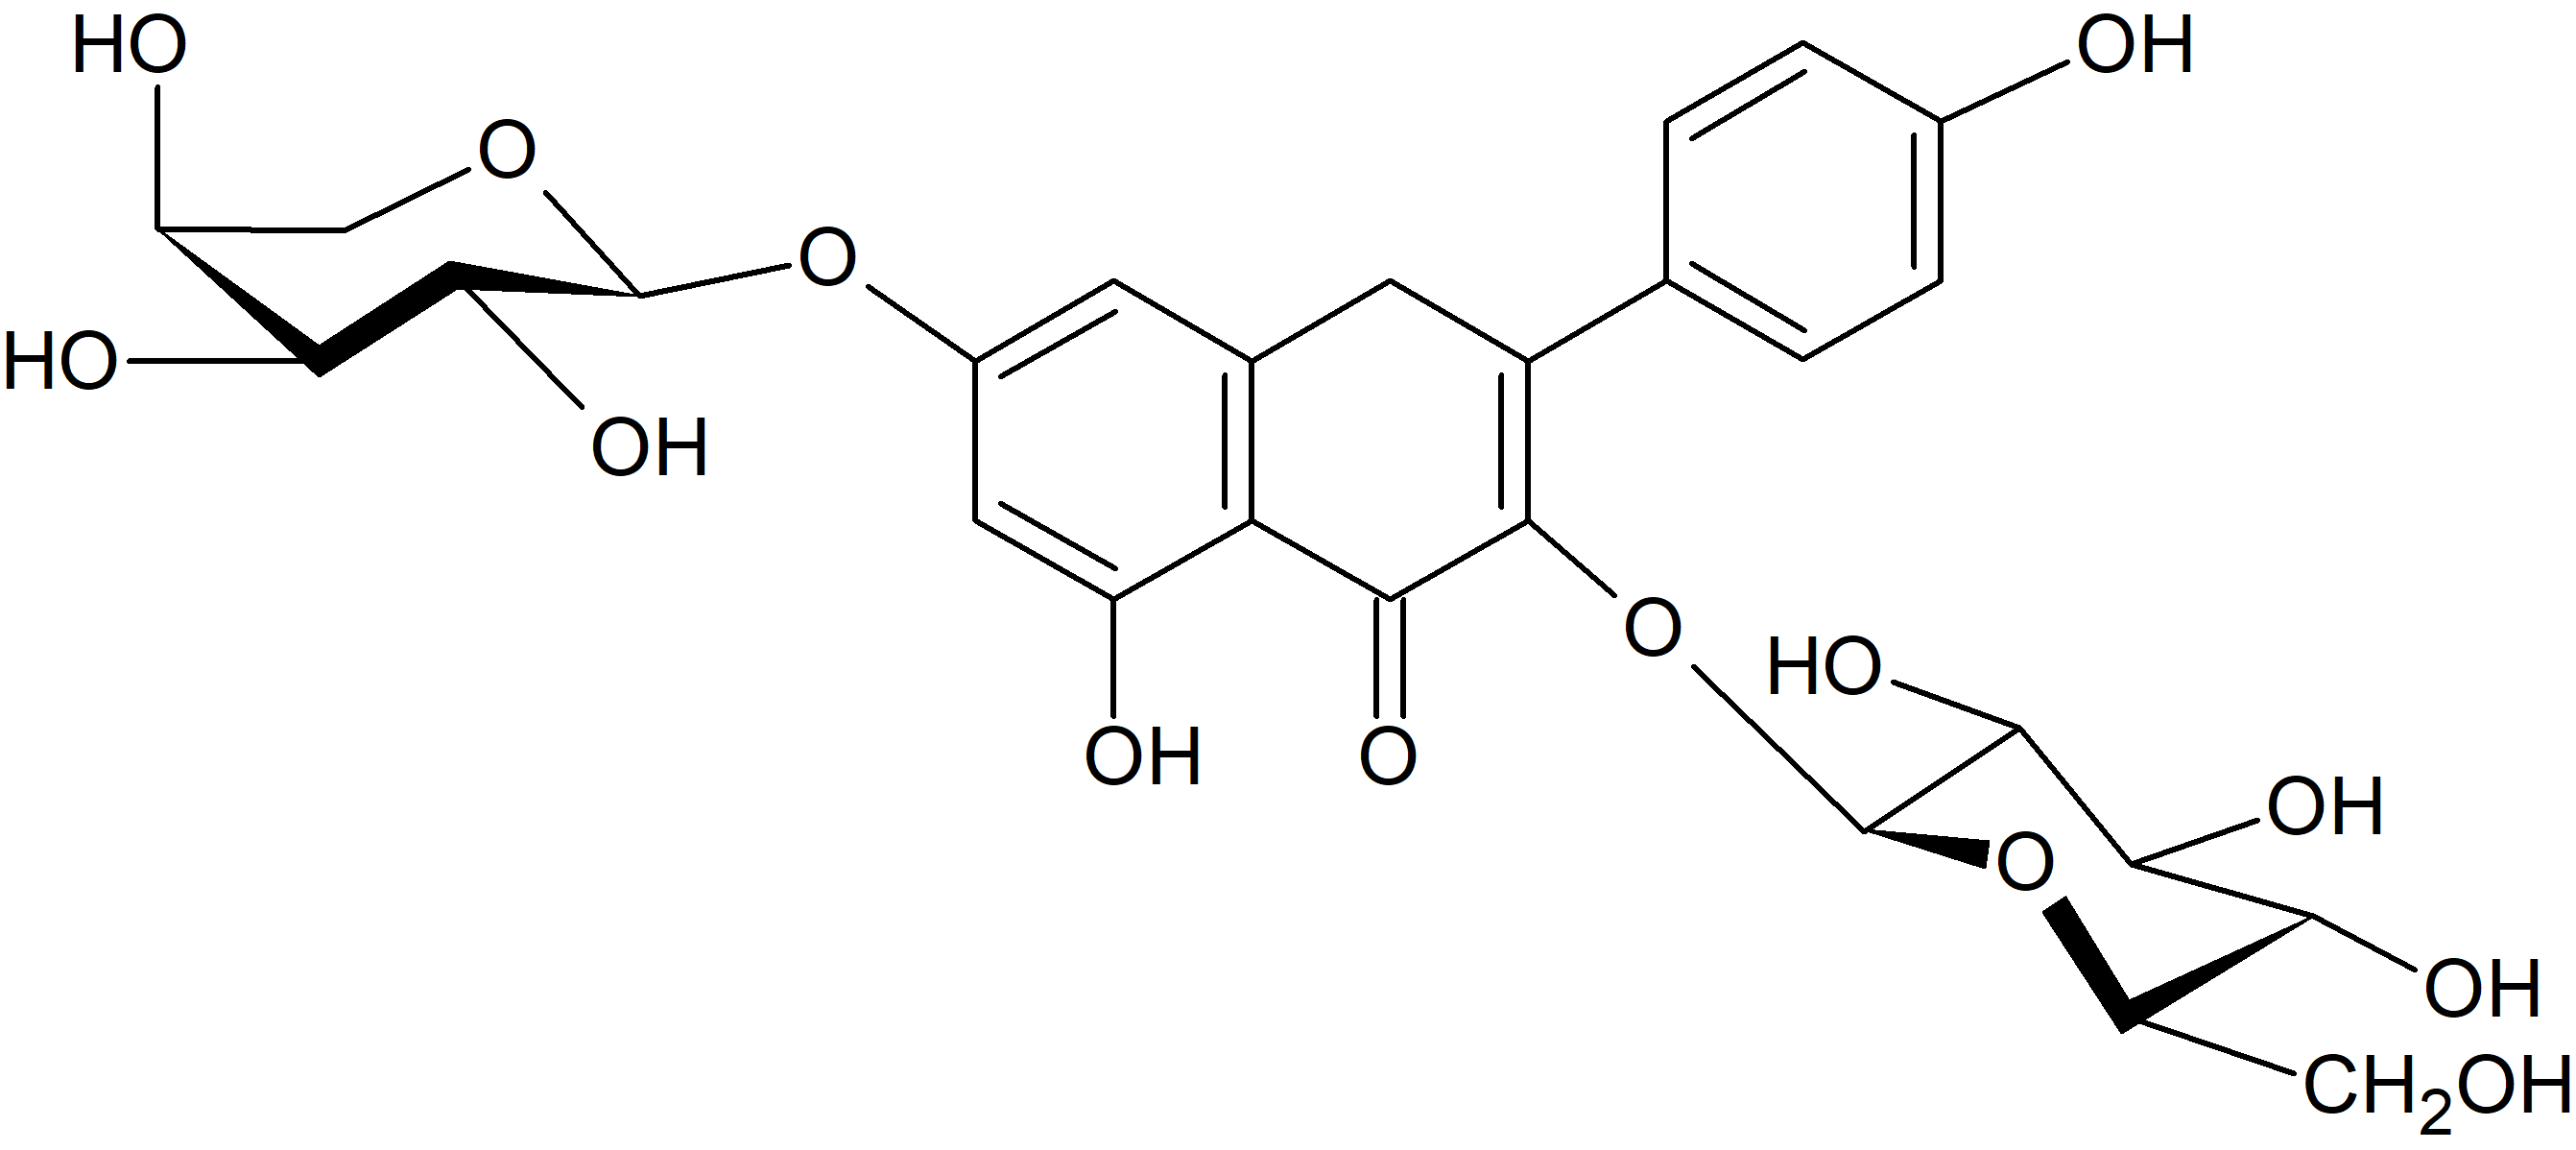 Kaempferol 3-O-glucoside-7-O-arabinoside